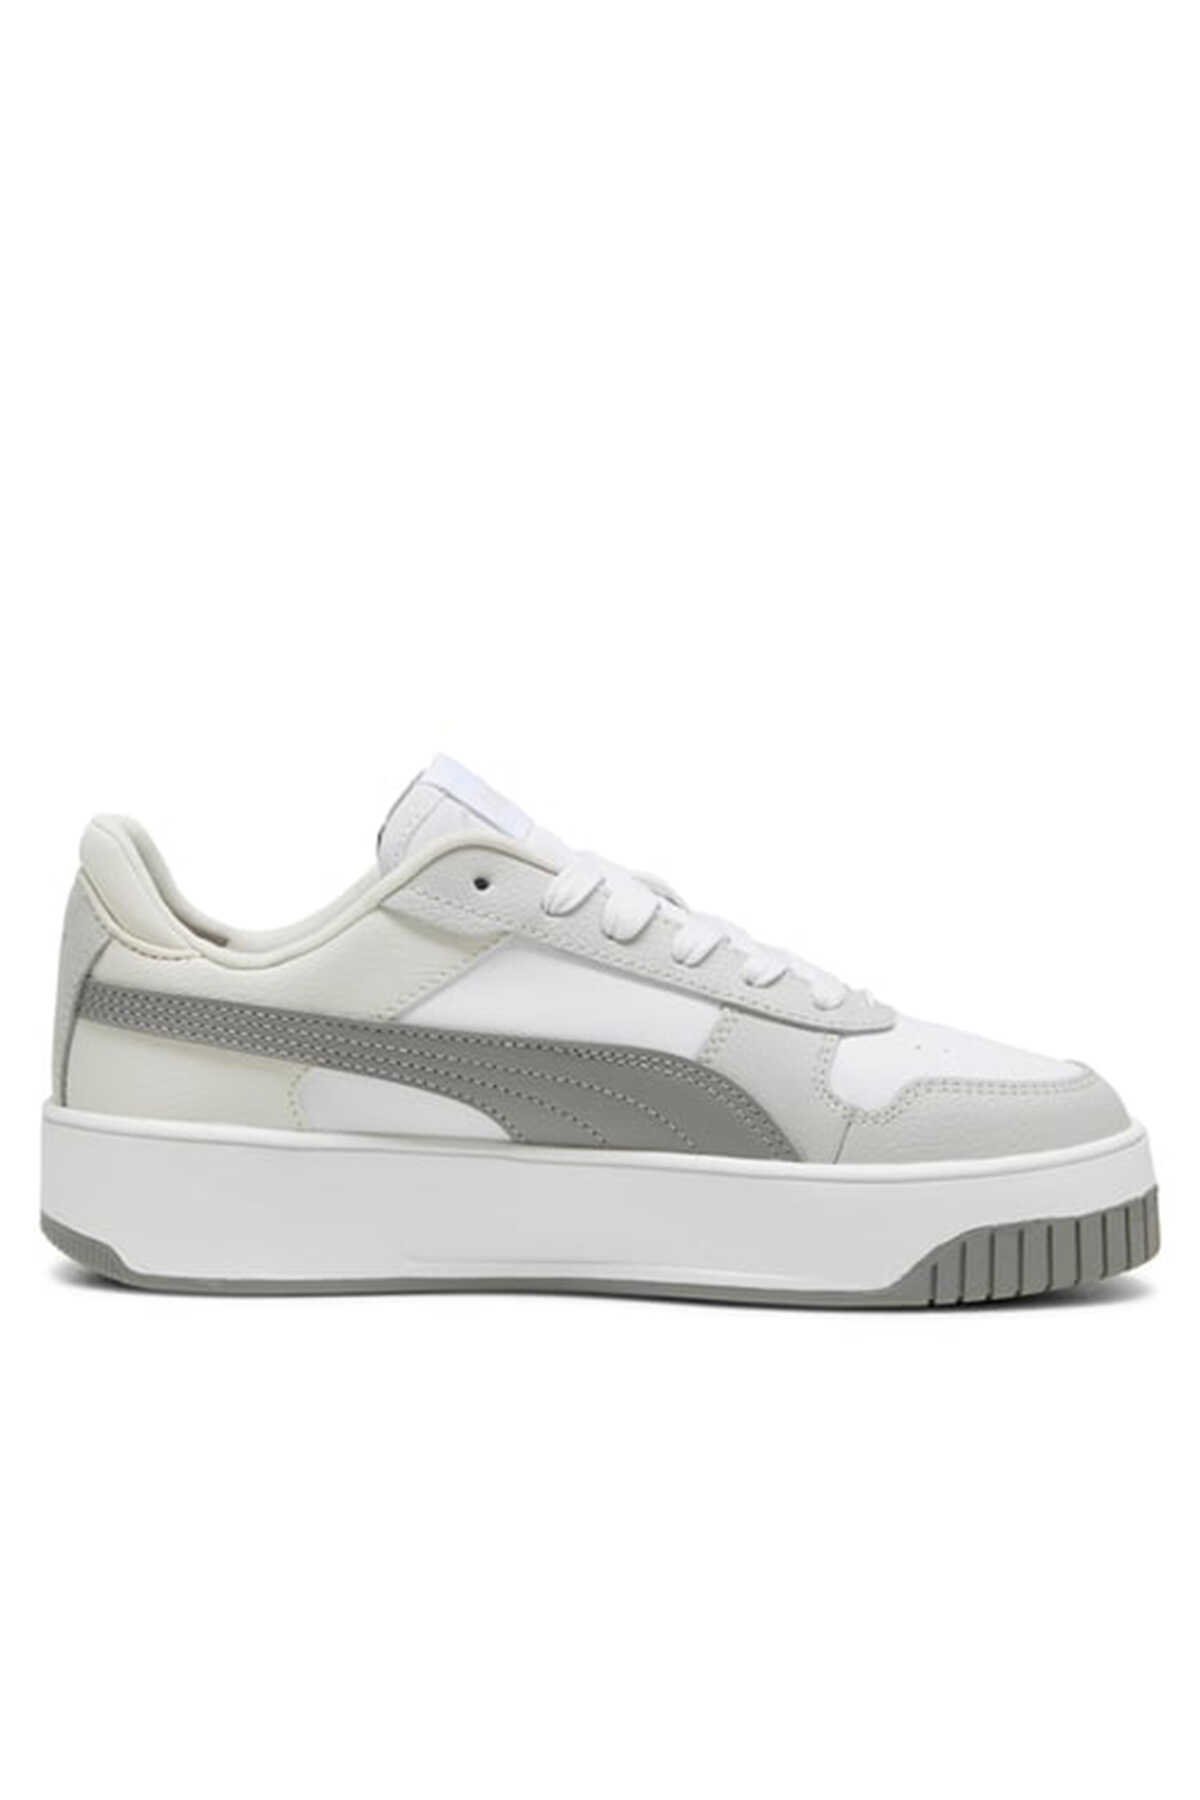 Puma - Puma Carina Street Kadın Sneaker Ayakkabı Beyaz / Gri